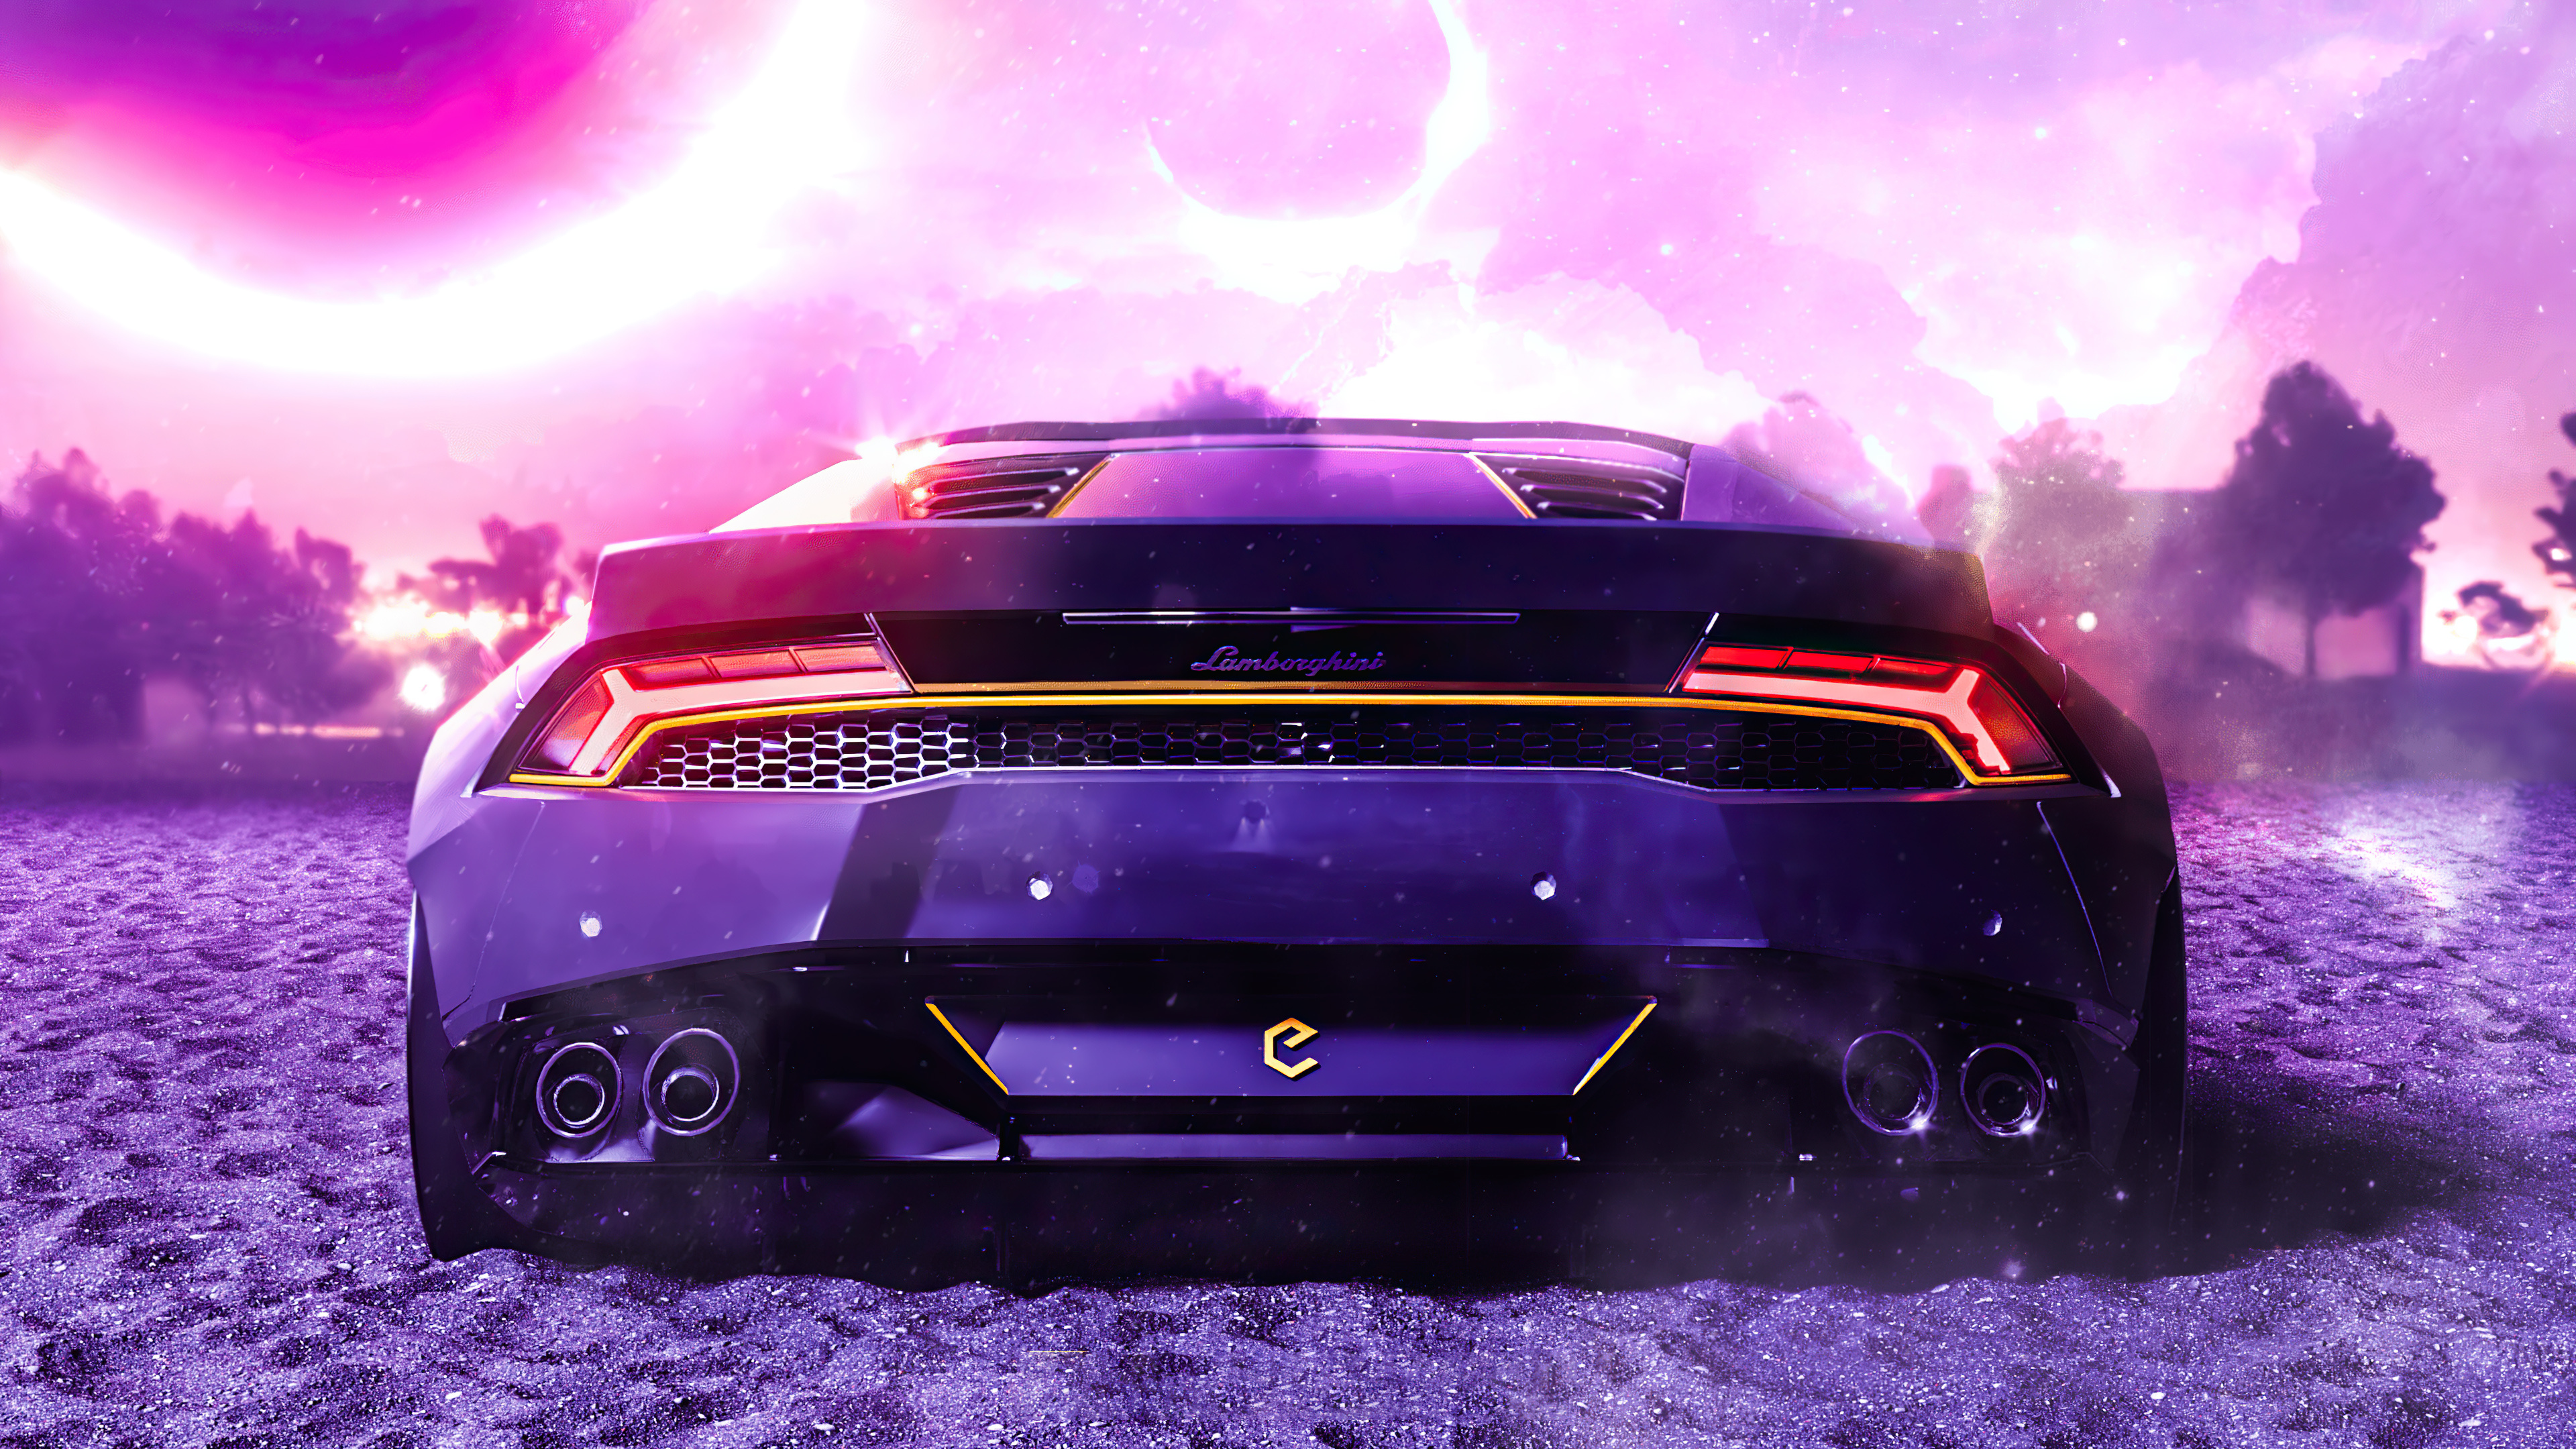 CGI 3D masterpiece, Lamborghini Huracan in motion, Stunning resolution, Captivating visuals, 3840x2160 4K Desktop